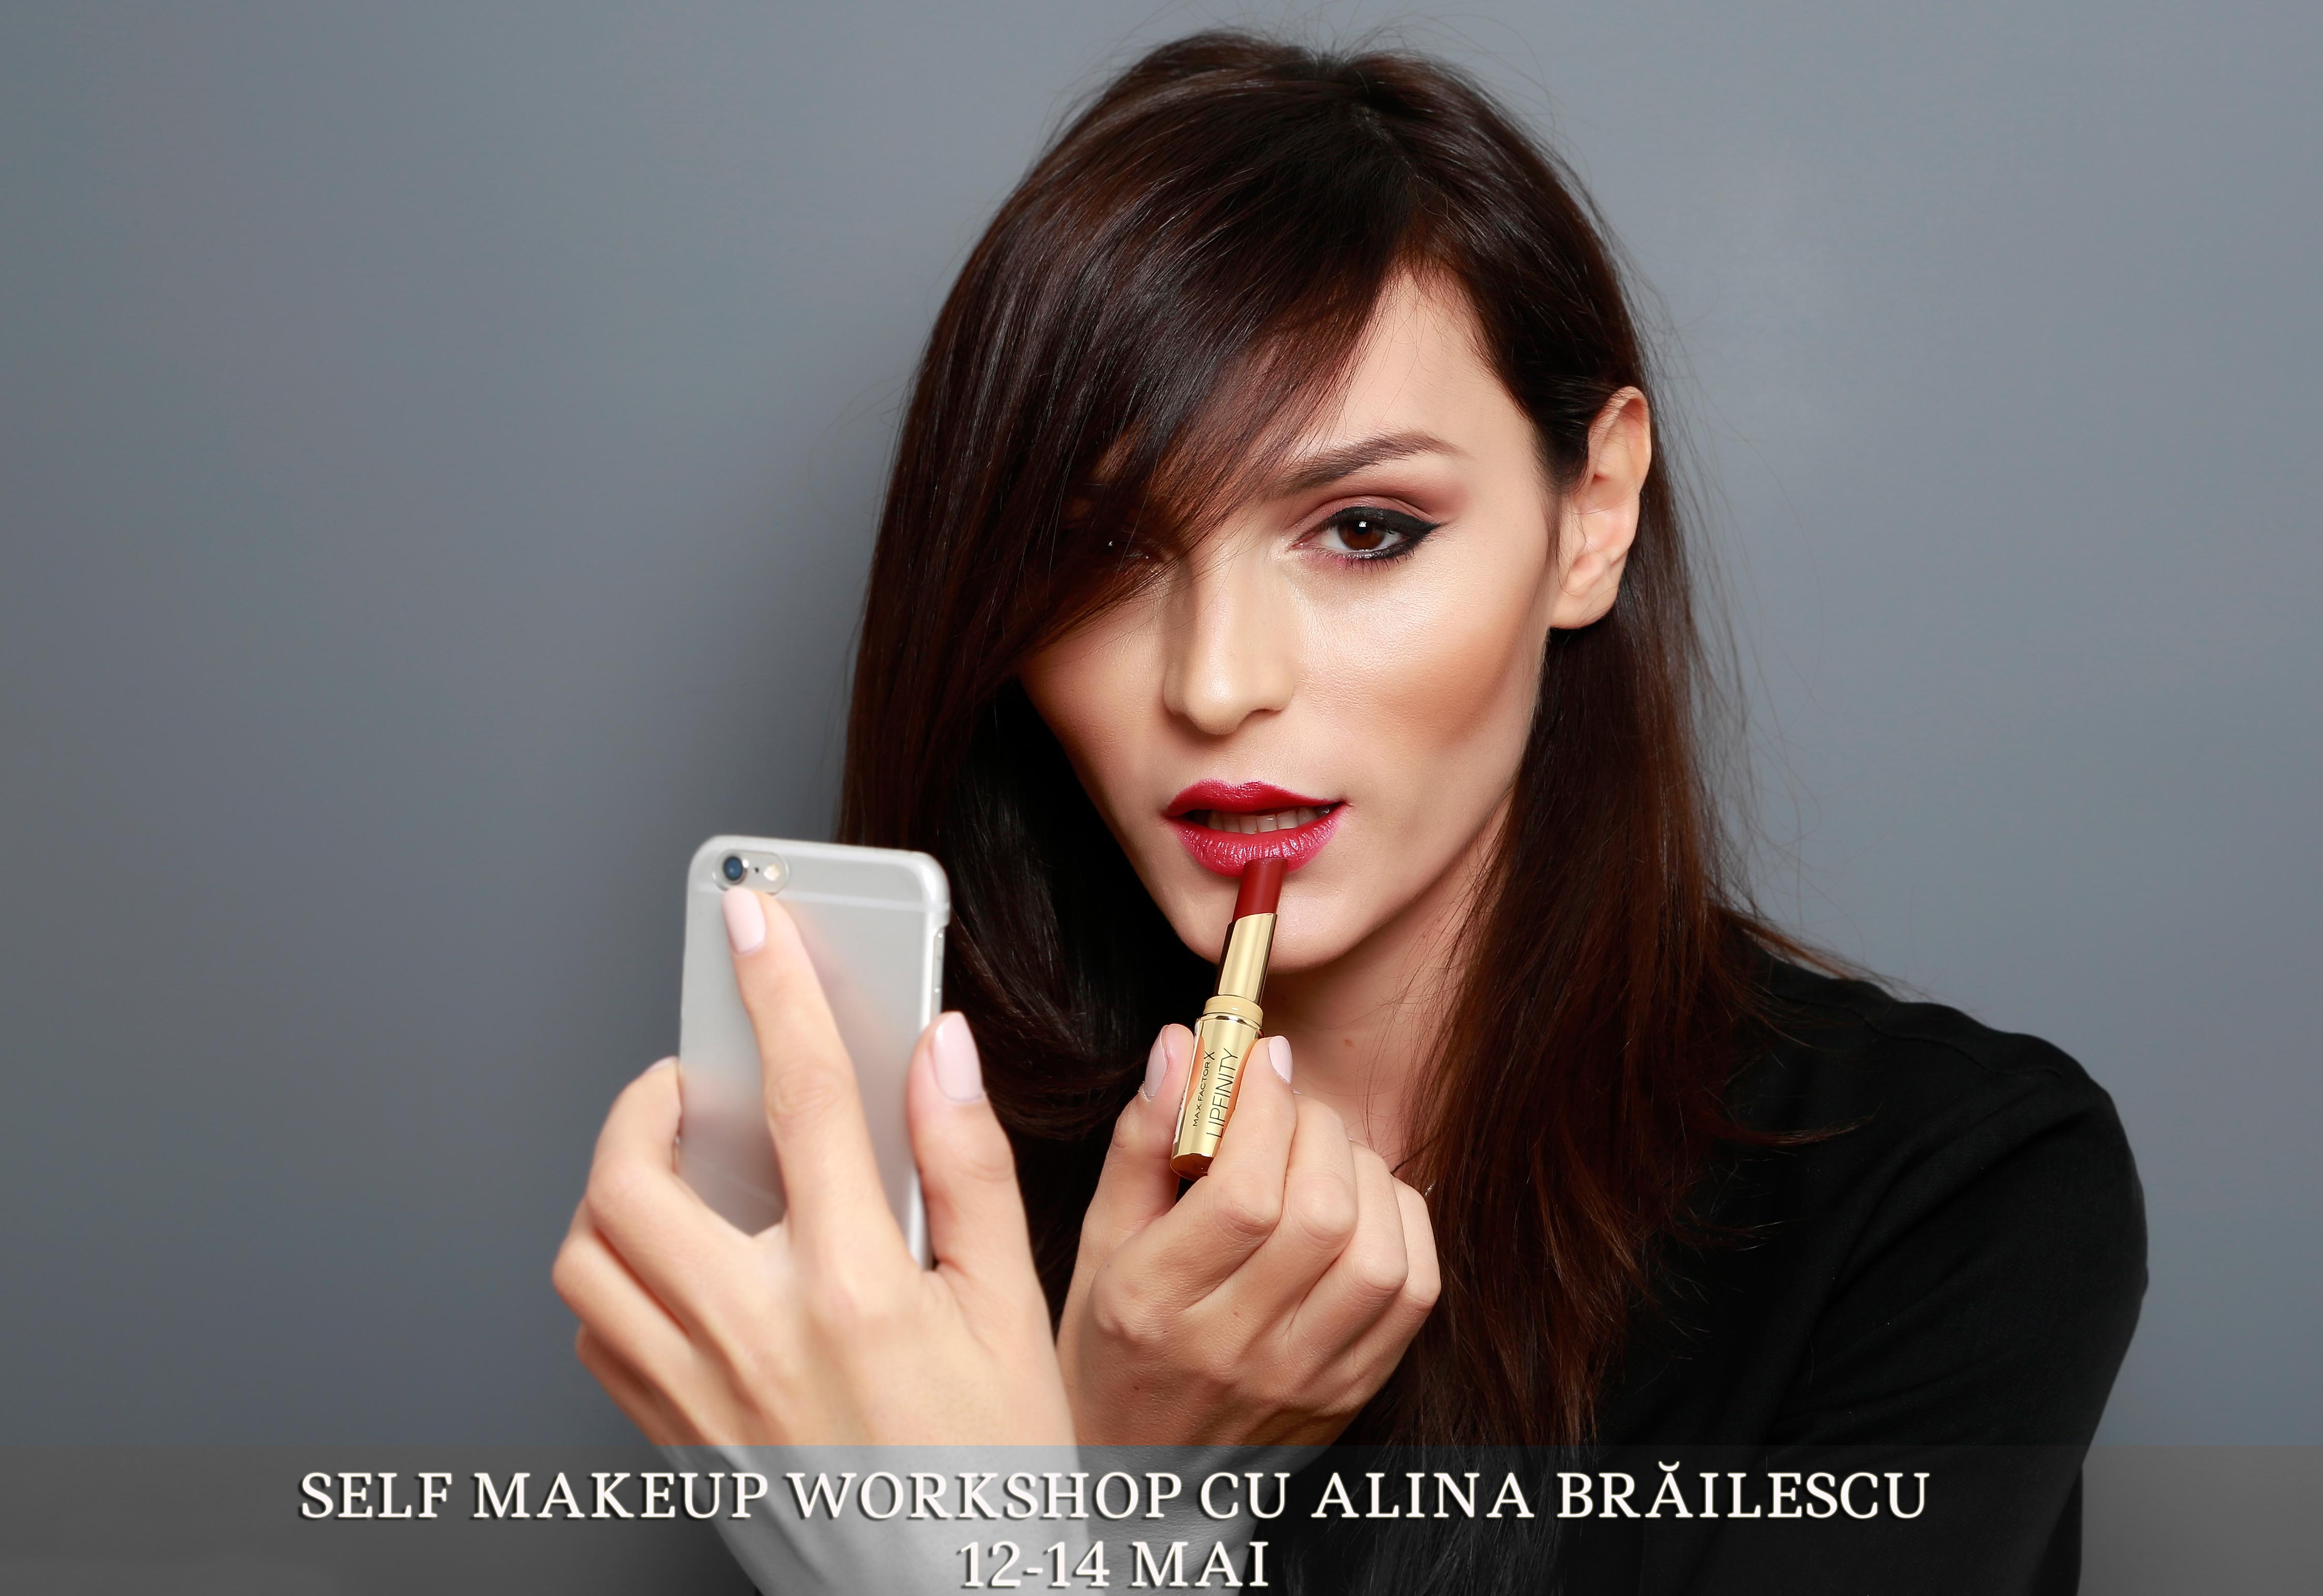 Workshop self makeup india online